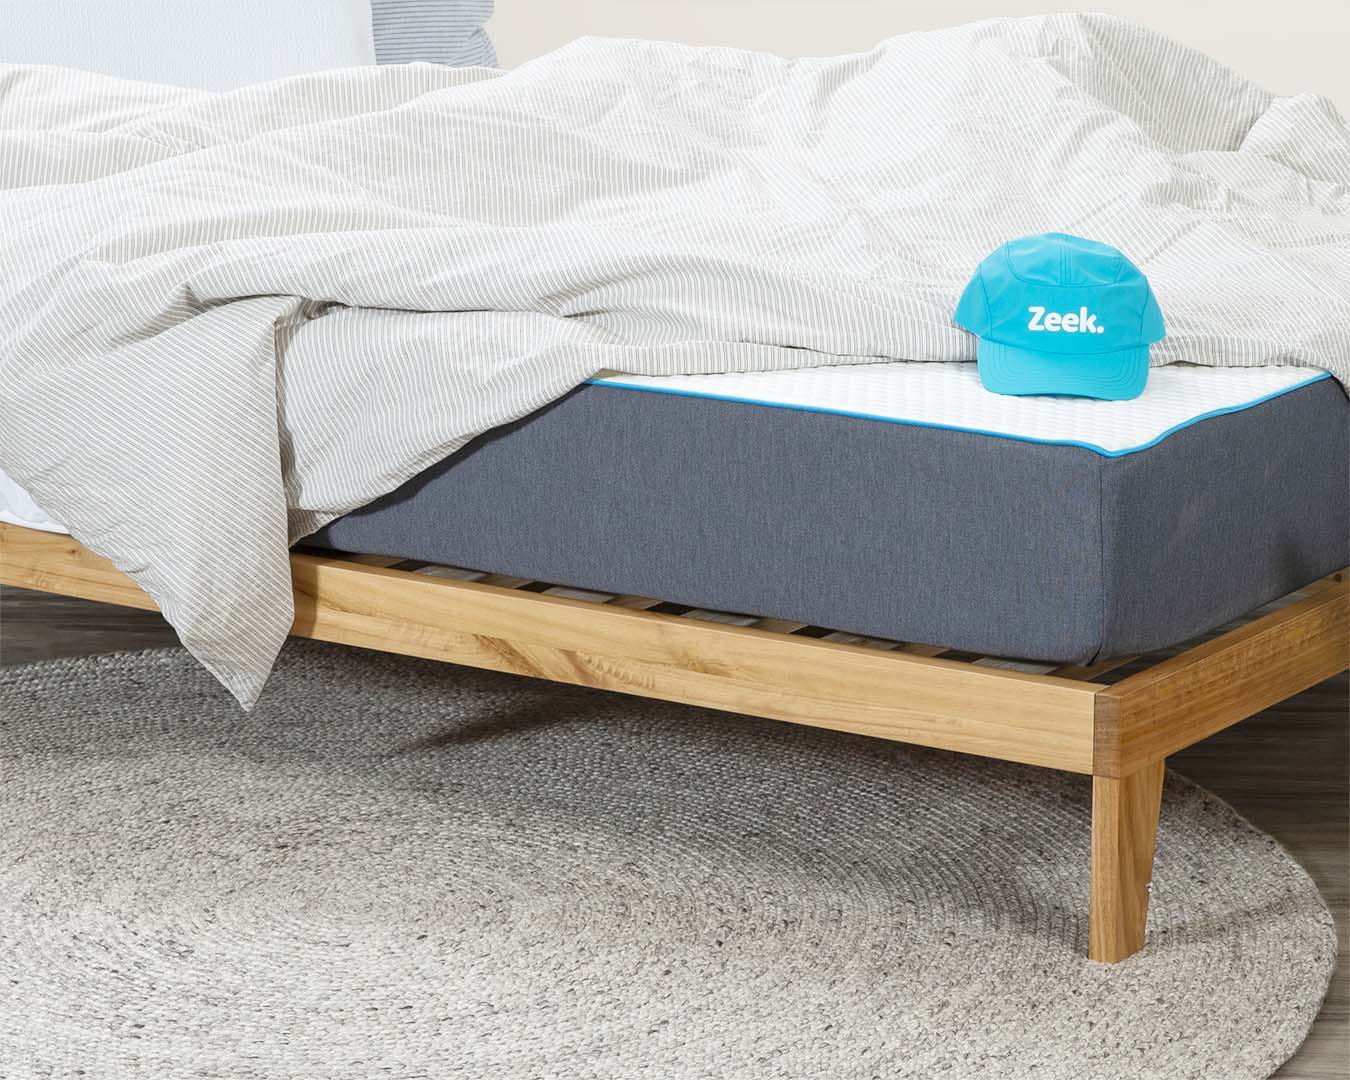 A Zeek model lounging about on a Zeek bed and mattress.